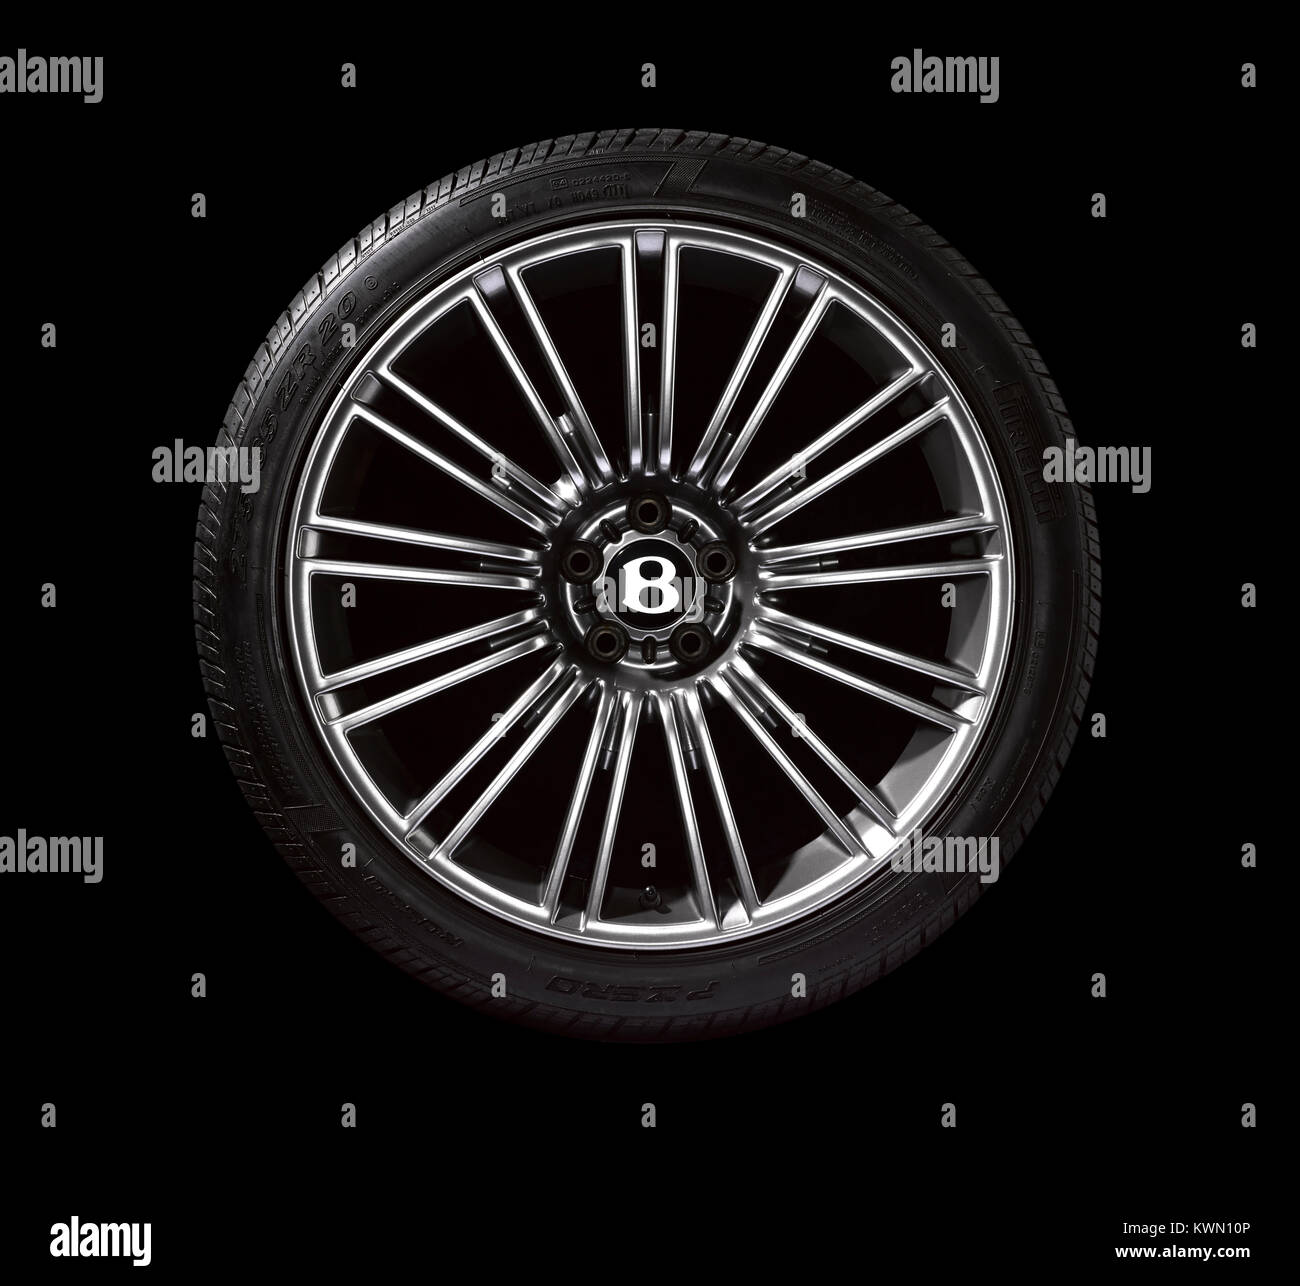 A Bentley car wheel on a black background Stock Photo